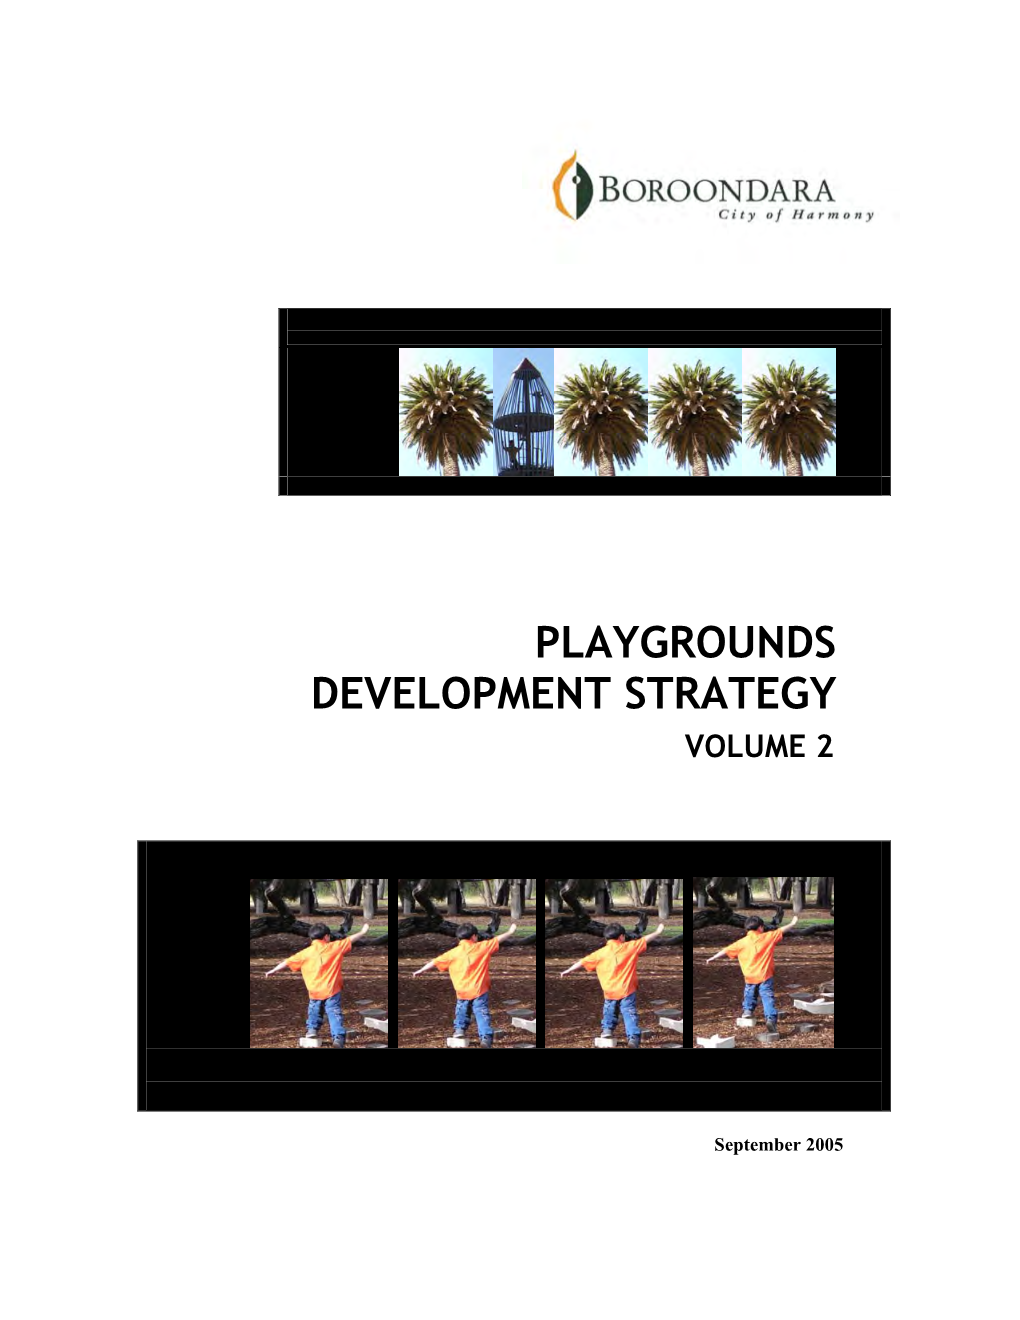 Playgrounds Development Strategy-2005 Vol-2